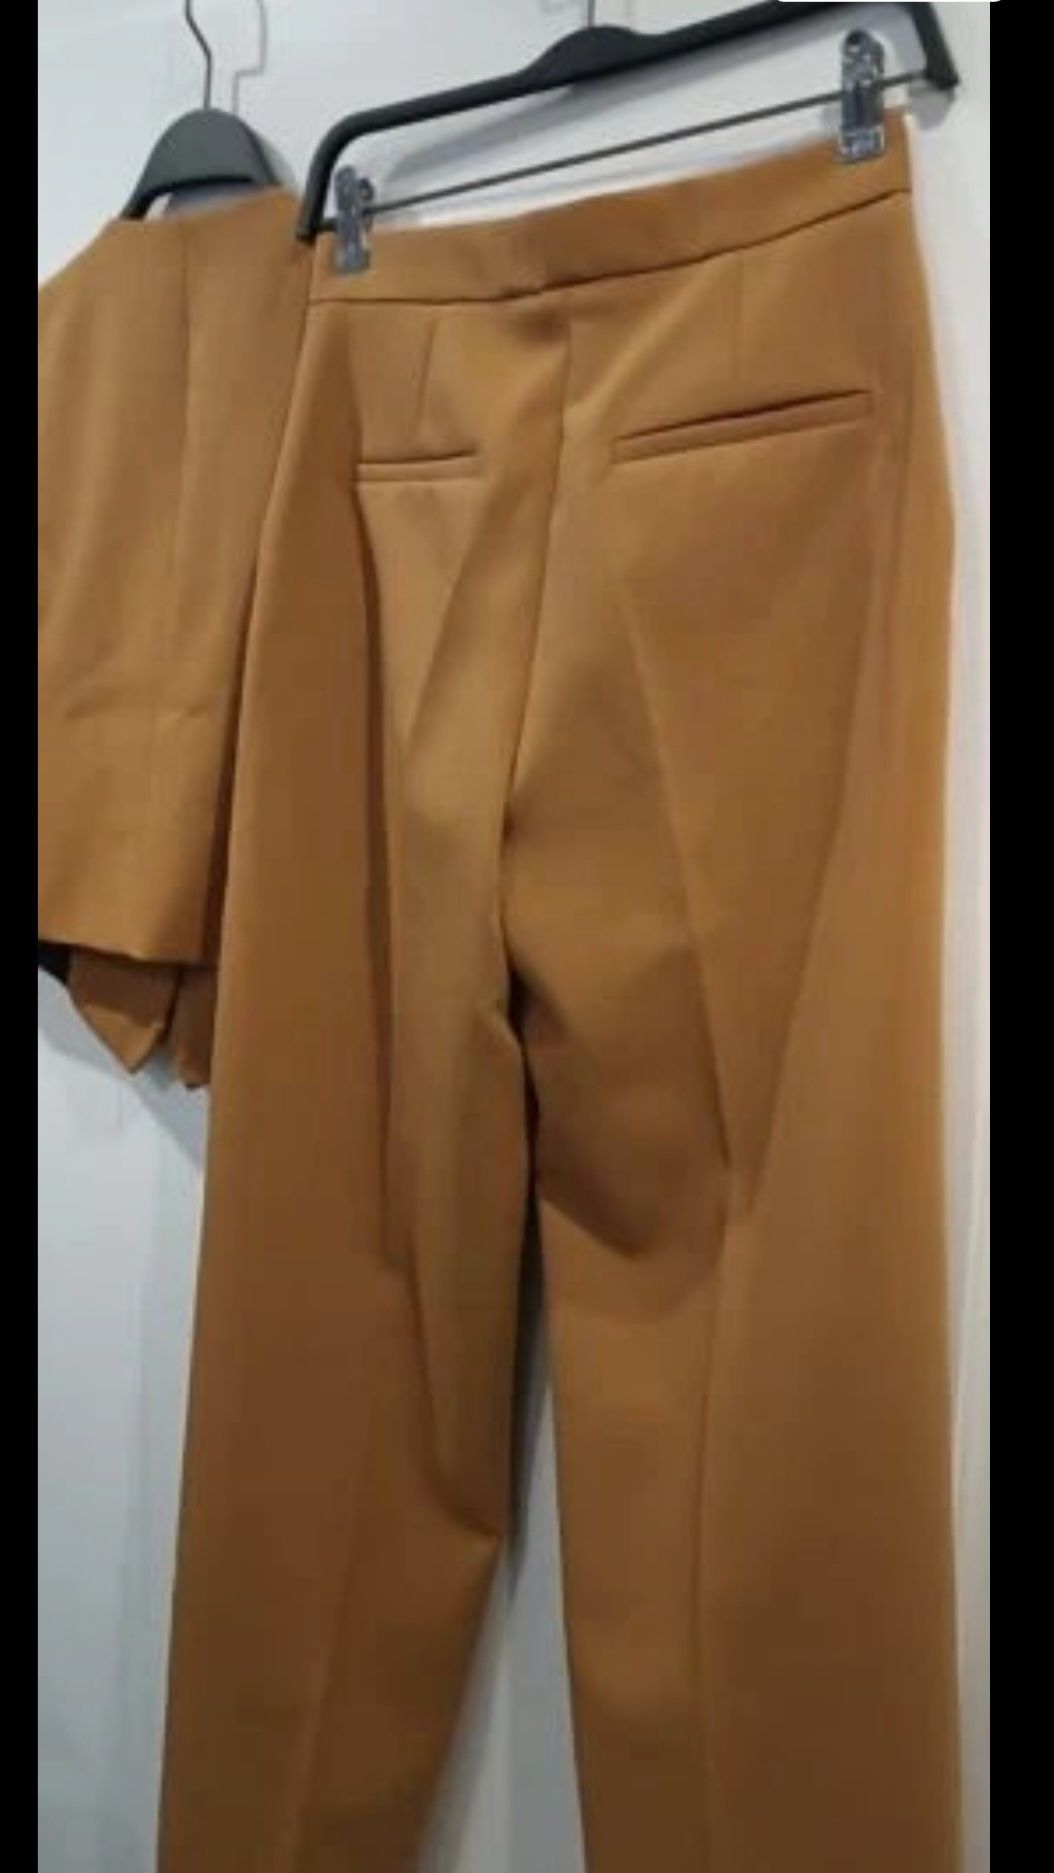 Komplet Zara spodnie i kamizelka